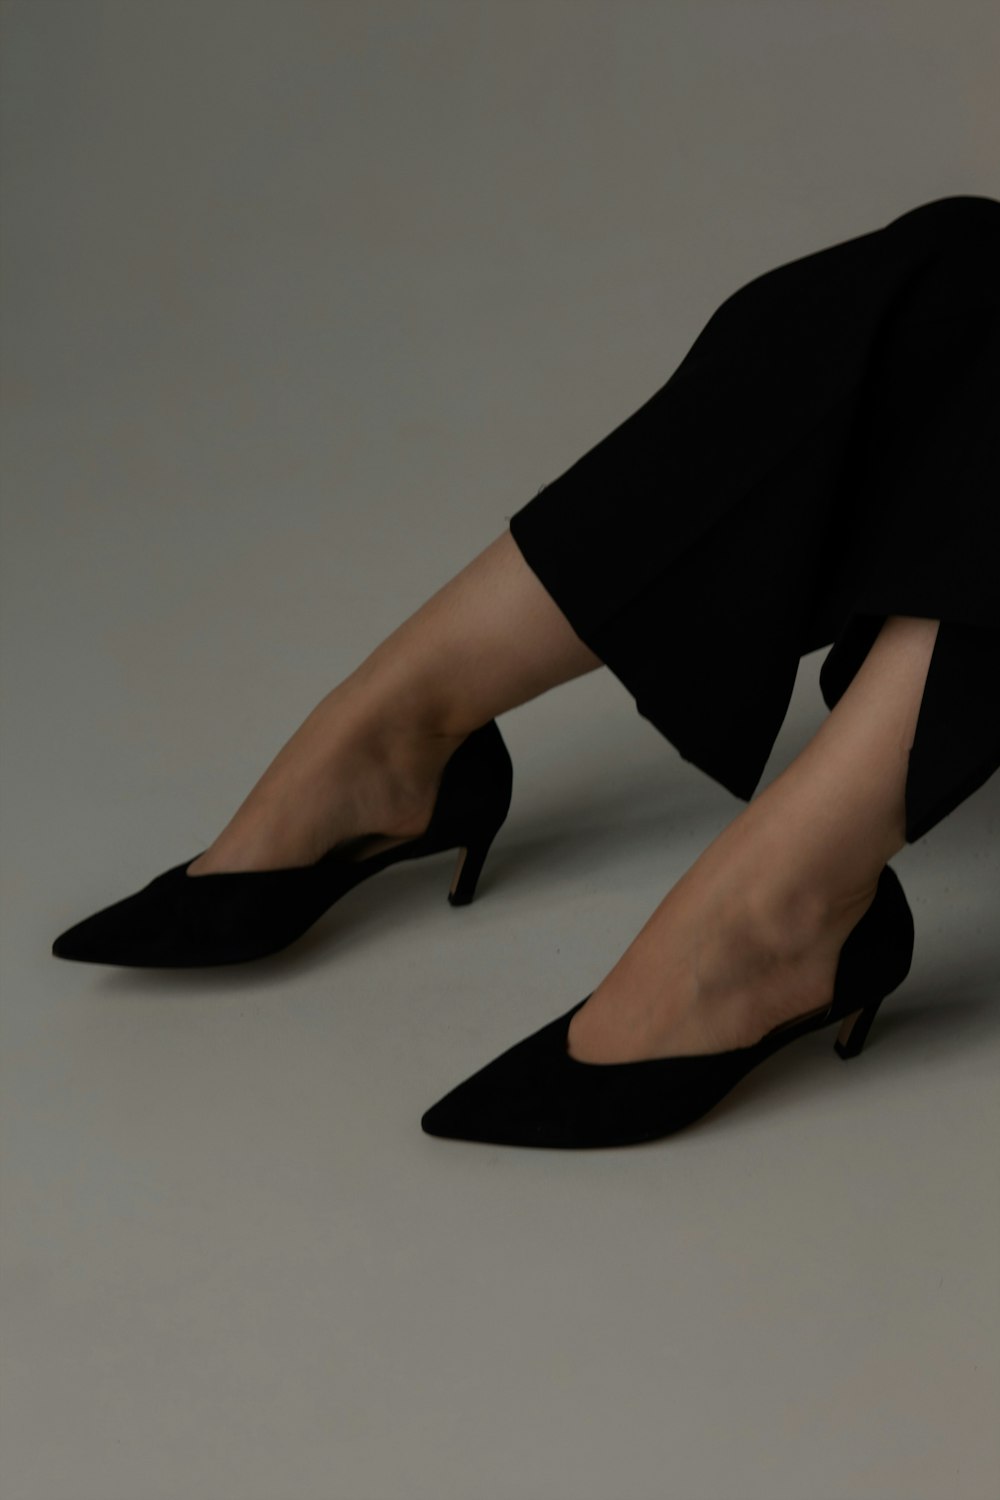 a woman wearing black high heels and a black dress